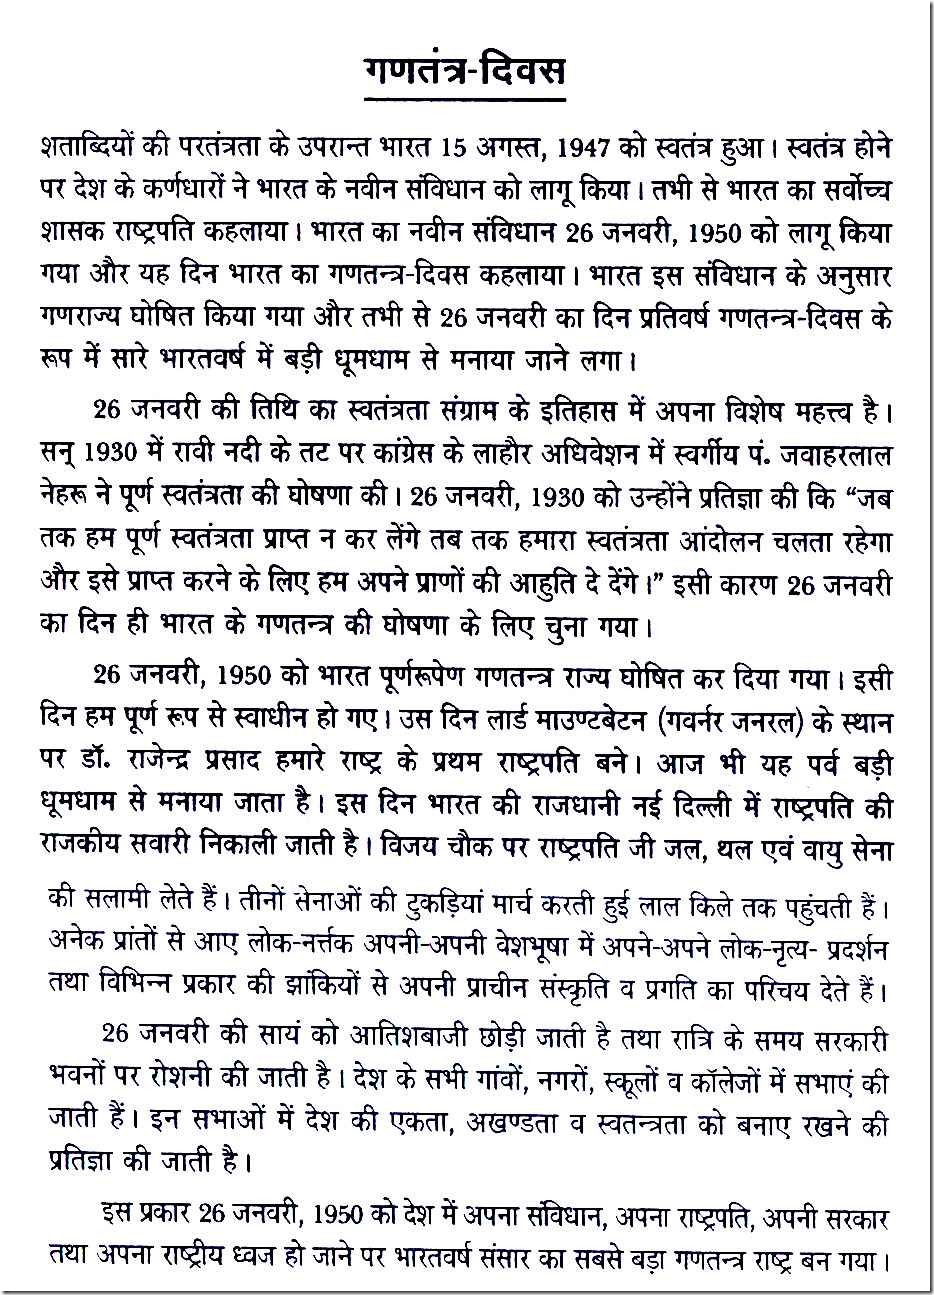 26 January / Republic Day Speech & Essay in Hindi